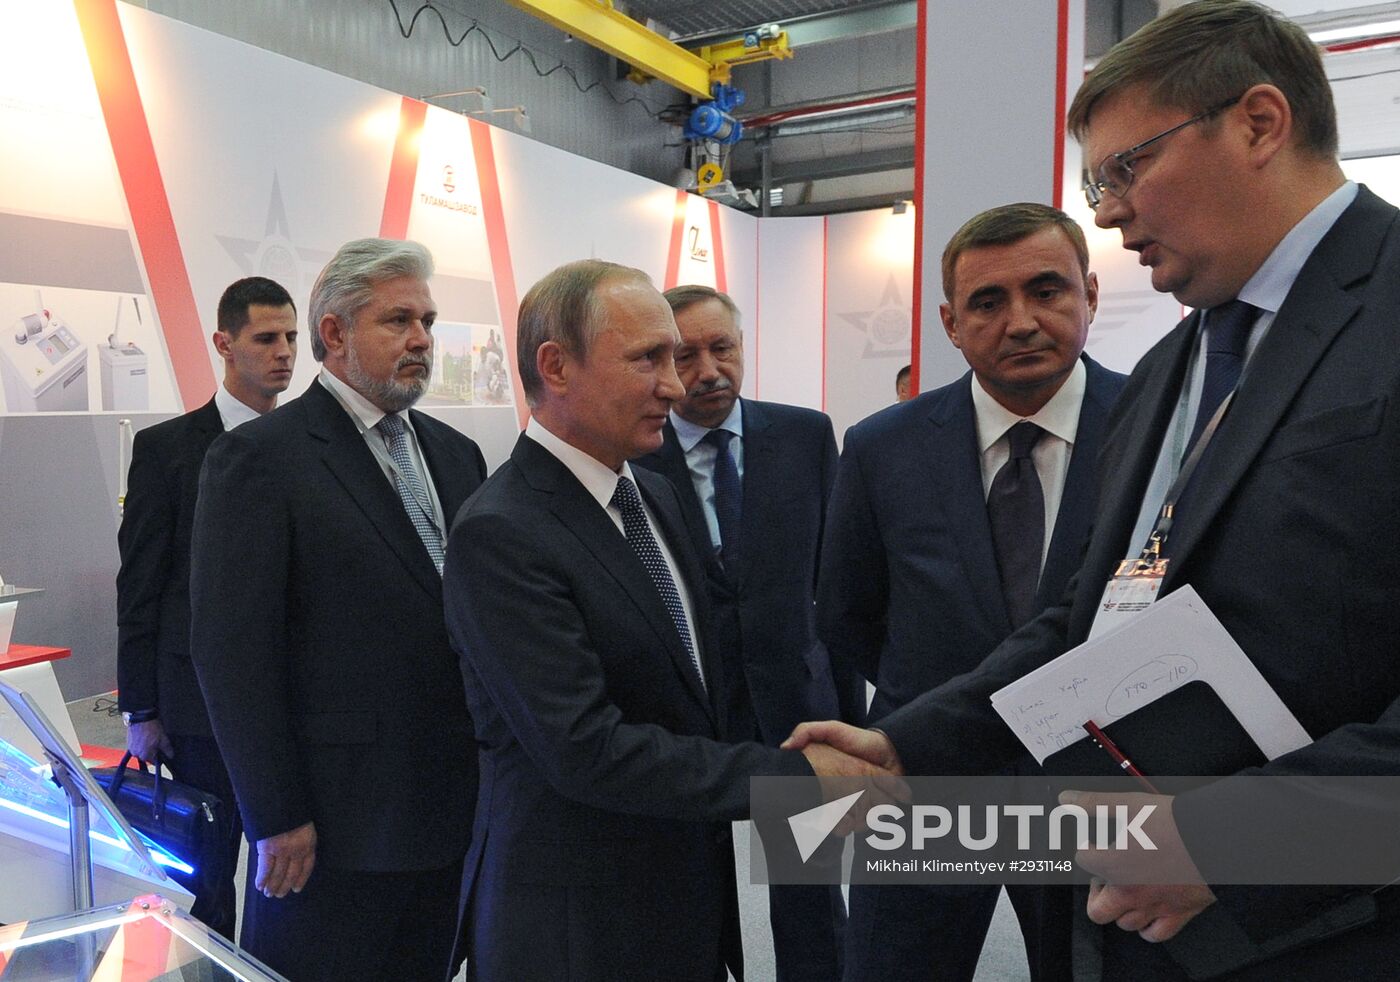 Russian President Vladimir Putin's working visit to Tula Region